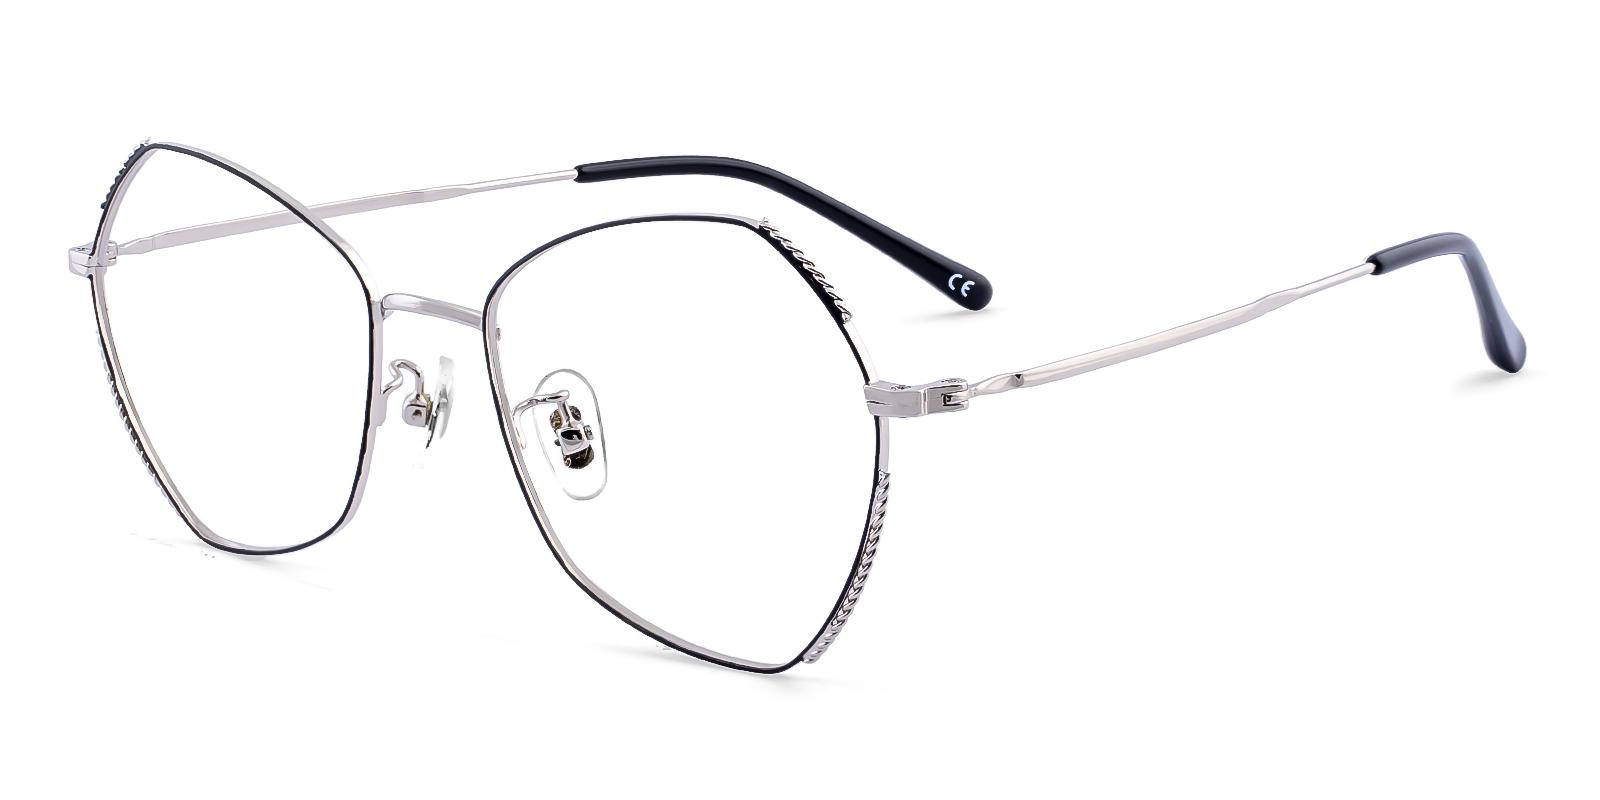 Dontic Black Metal Eyeglasses , NosePads Frames from ABBE Glasses